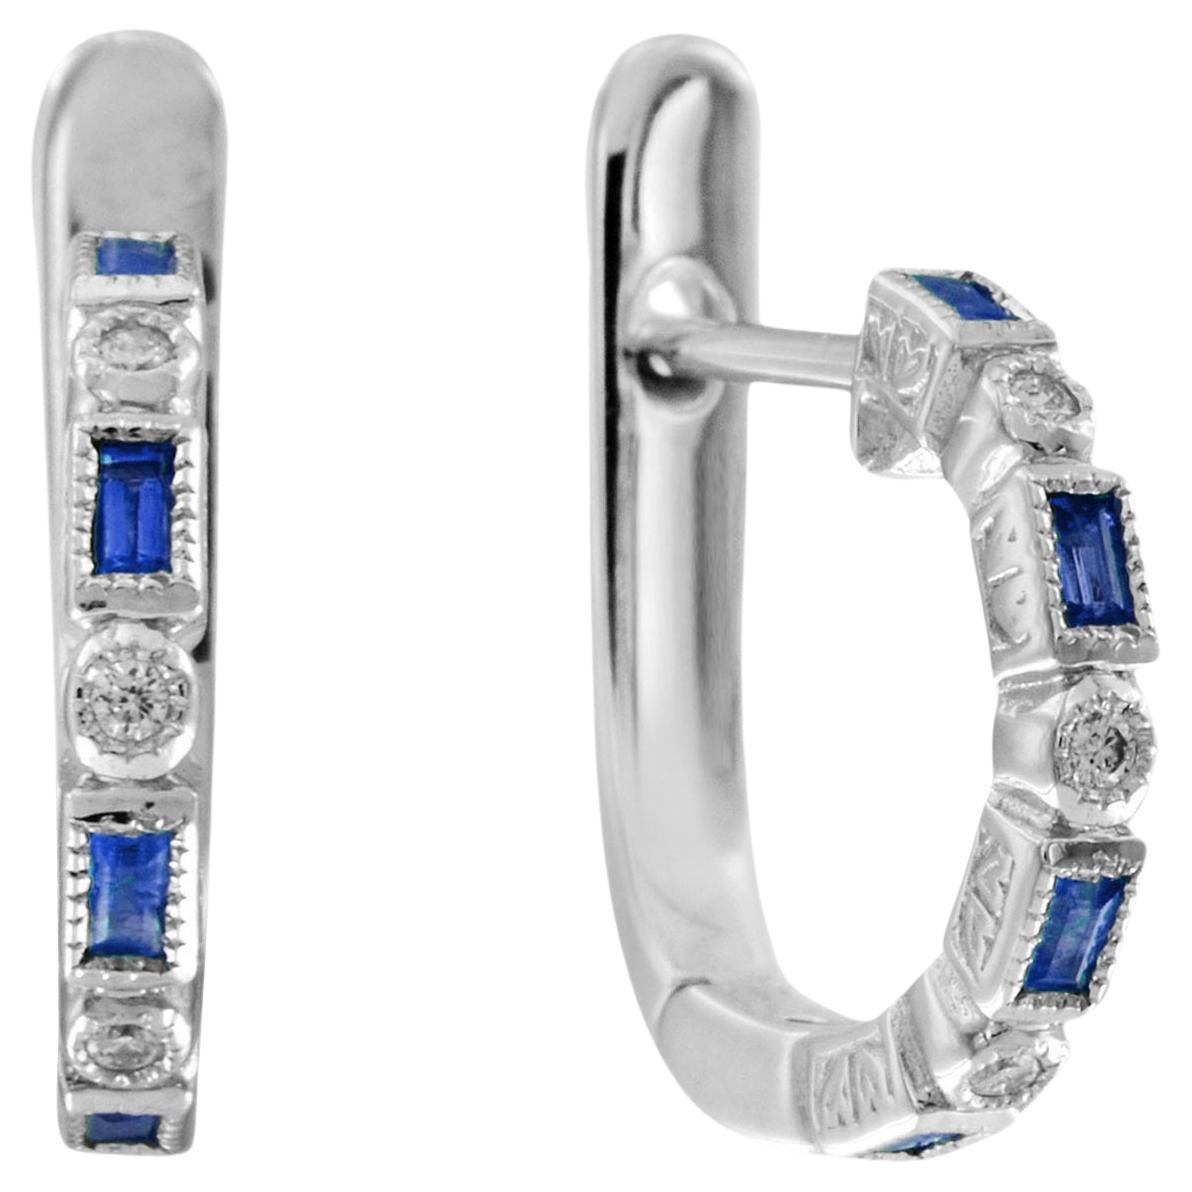 Alternate Baguette Blue Sapphire and Round Diamond Earrings in 14K White Gold